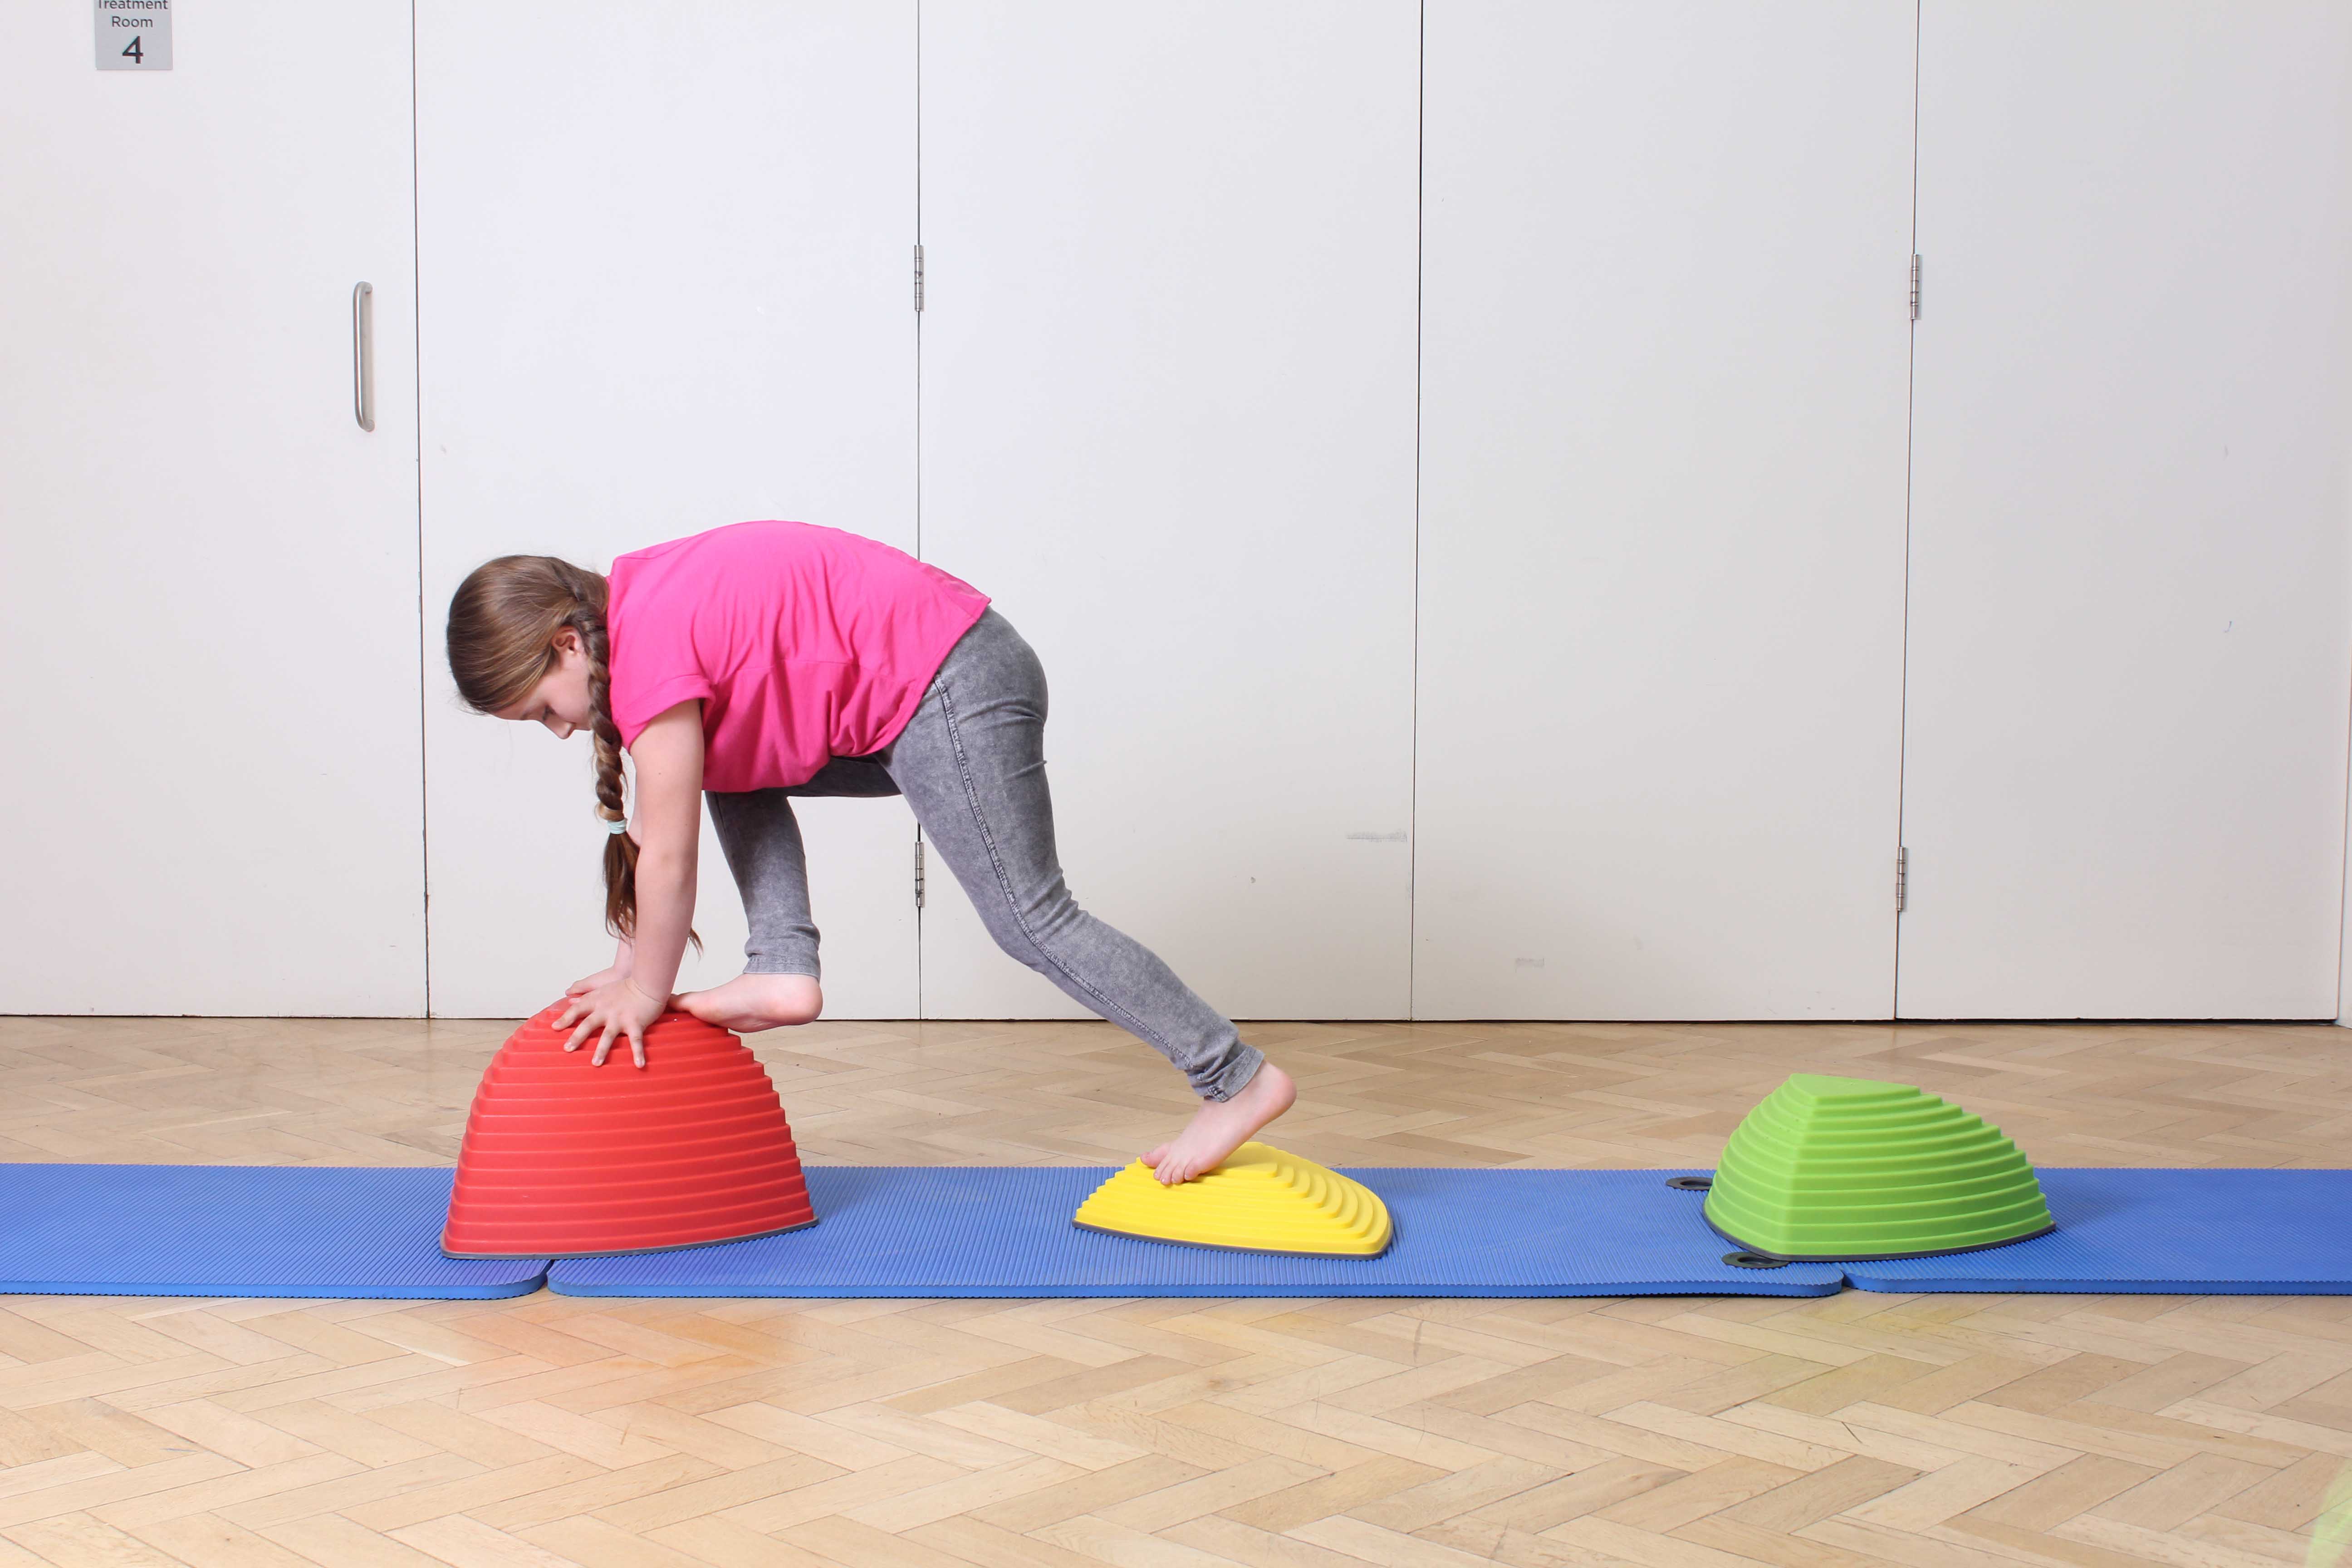 Guiding rehabilitation exercises through play activities